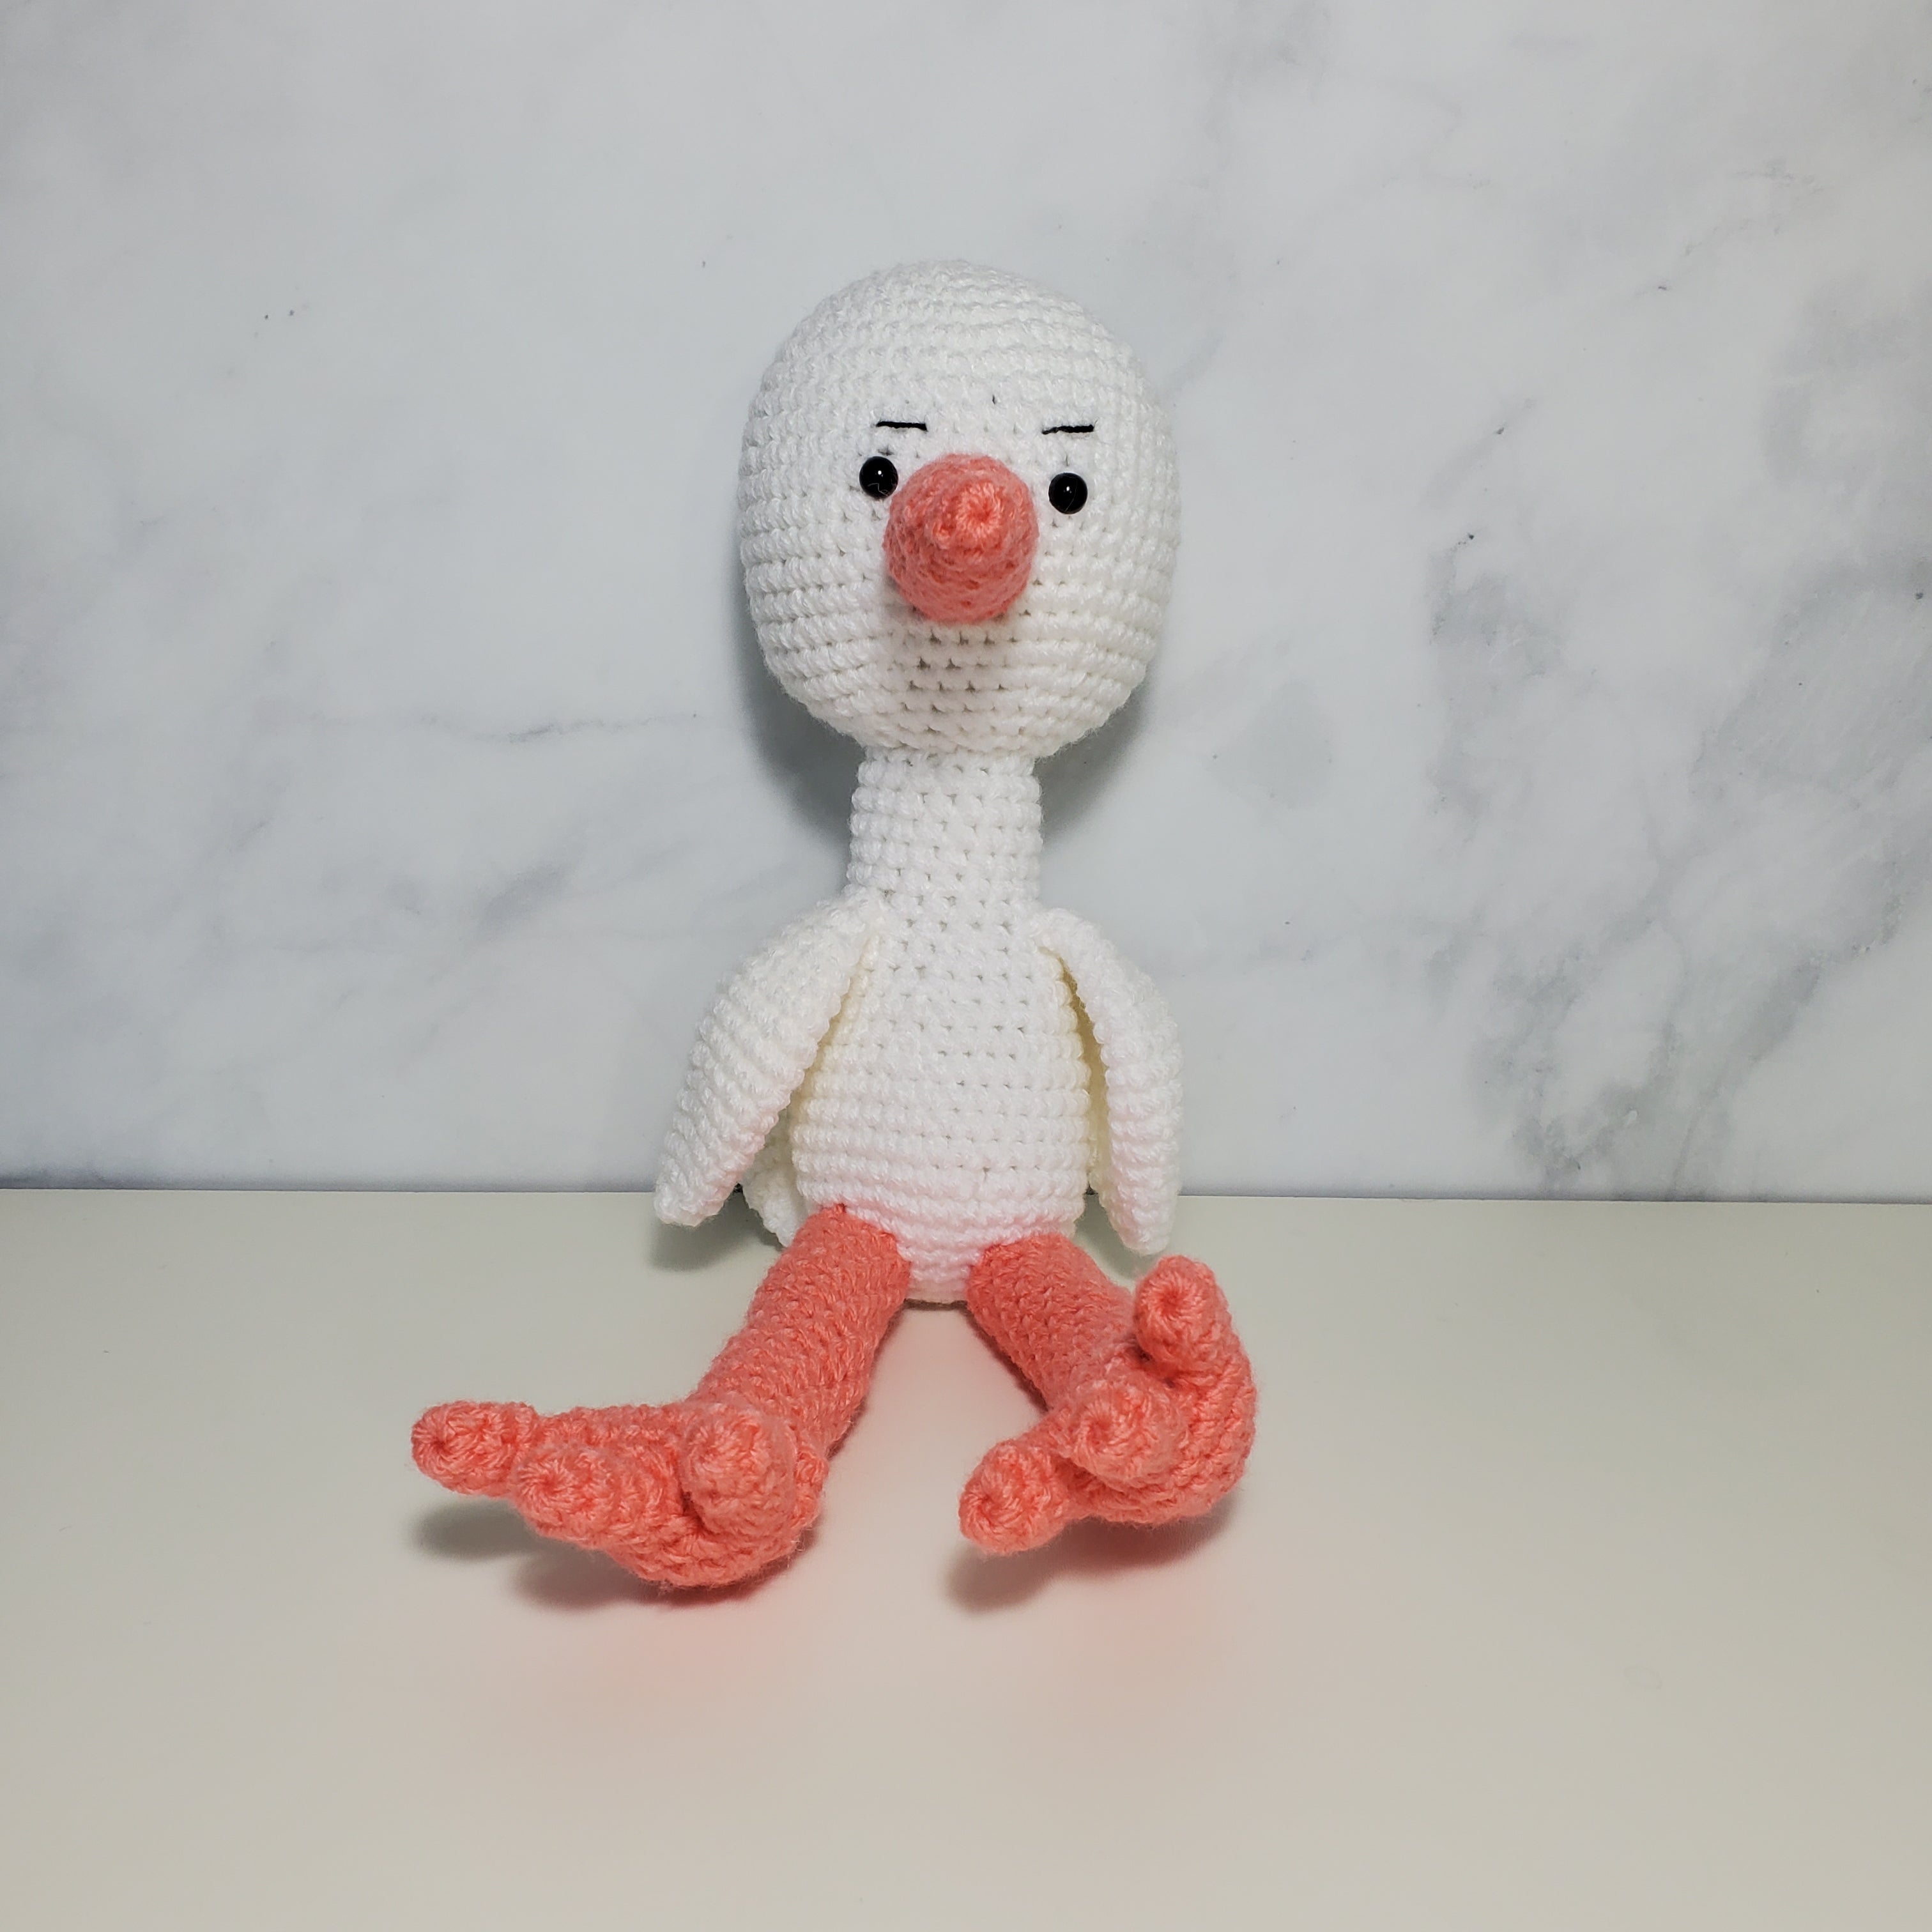 Cute Handmade Cotton Honeybee Crochet Squishy Soft Toy for Kids & Todd